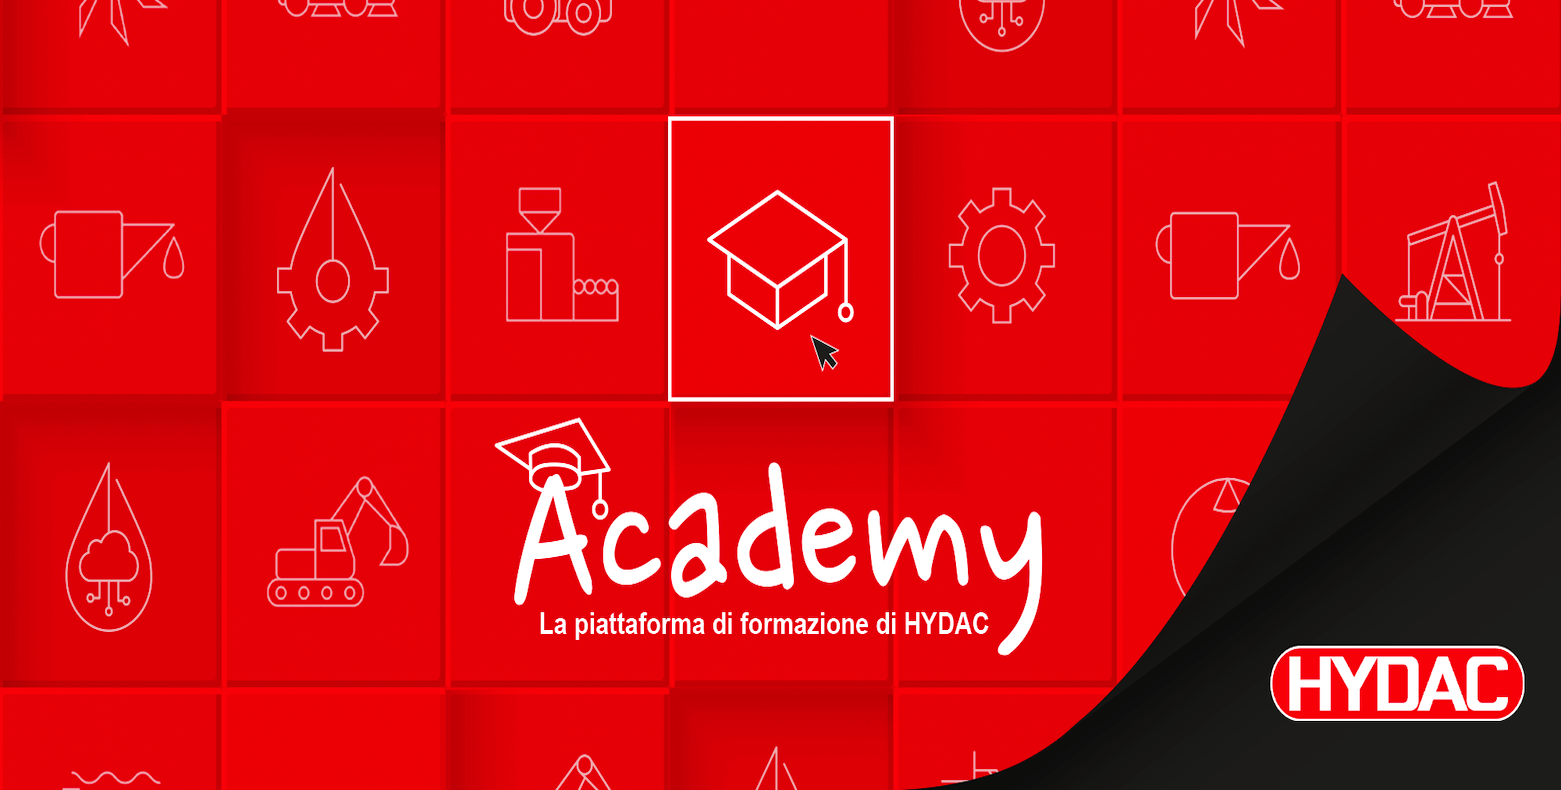 HYDAC_academy_landing_manutenzionepng